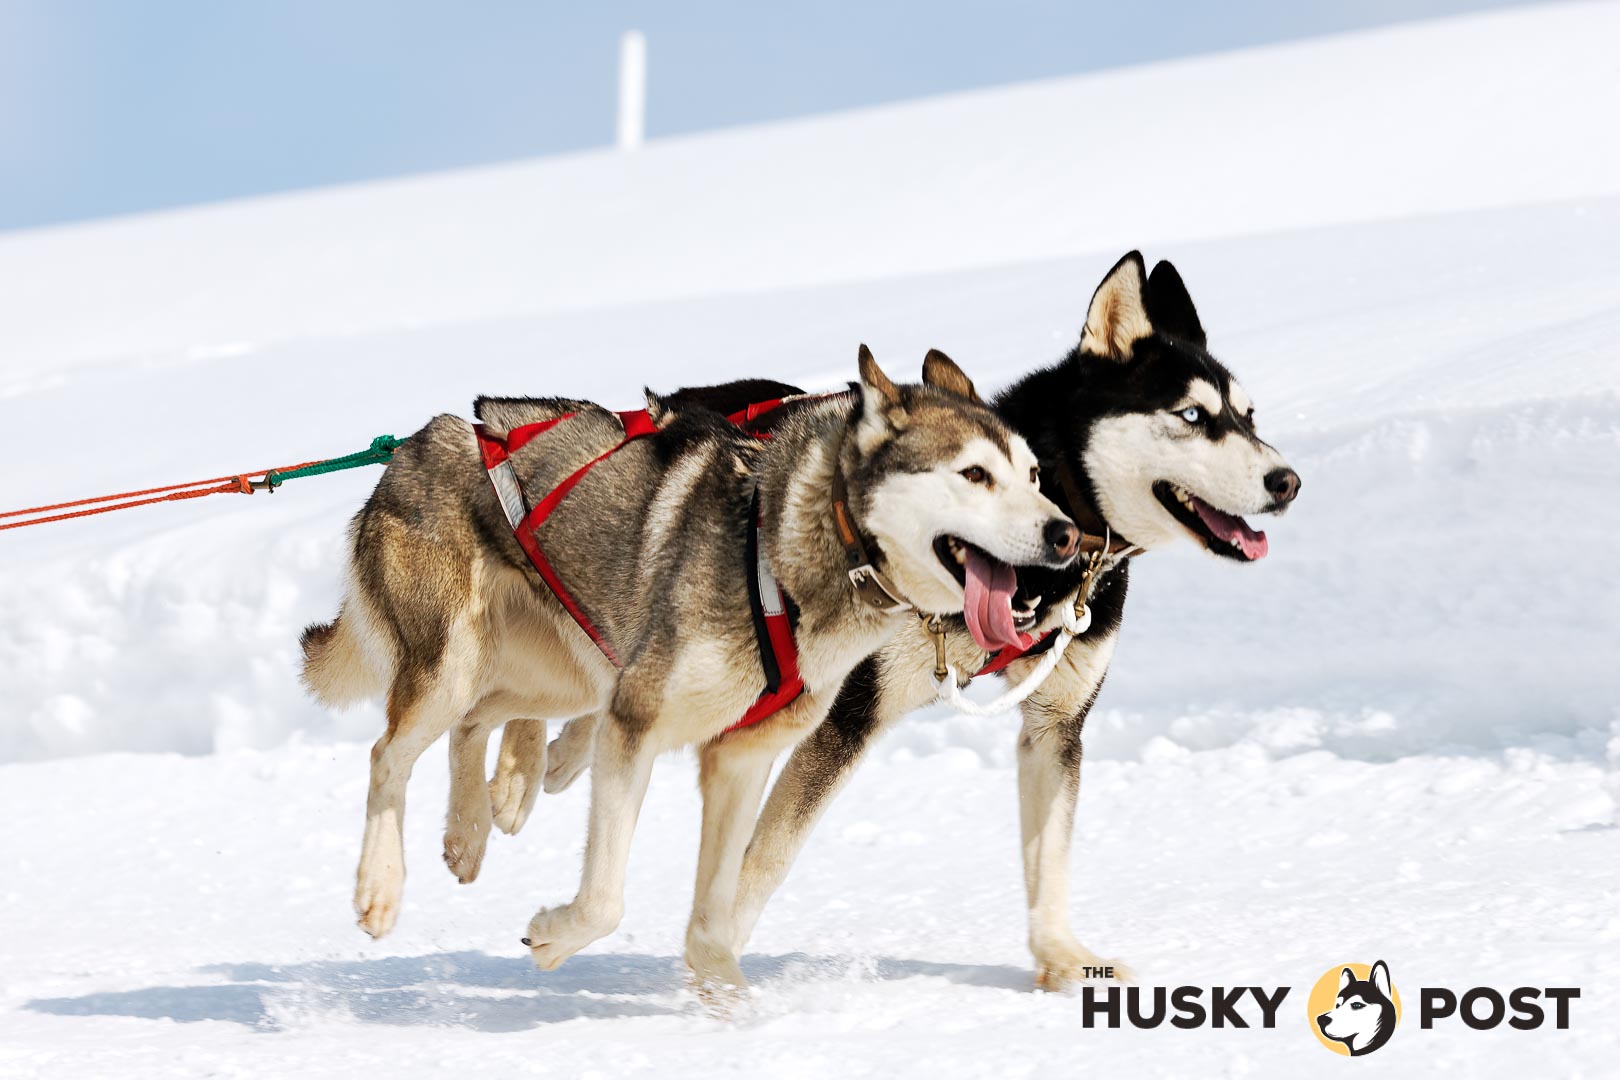 Husky race on alpine mountain in winter